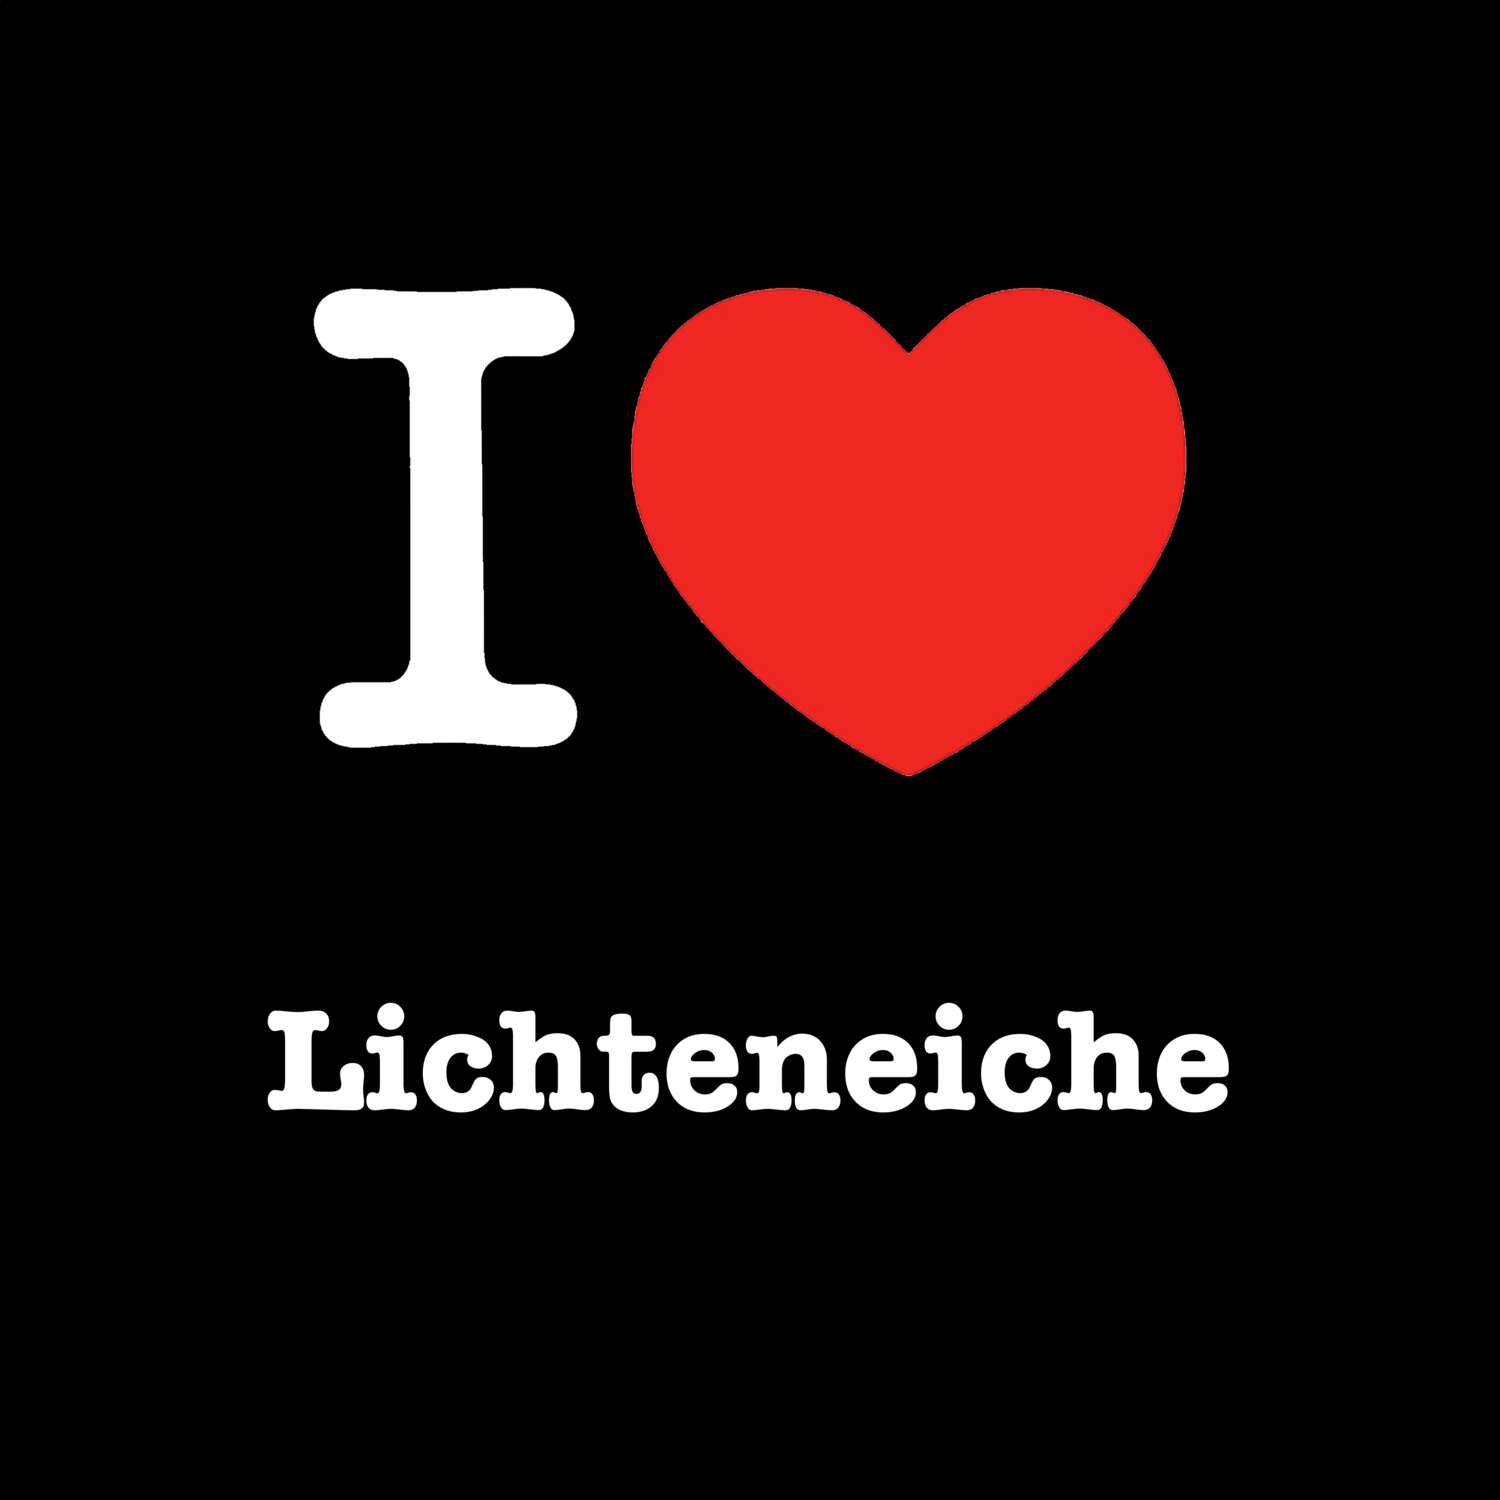 Lichteneiche T-Shirt »I love«